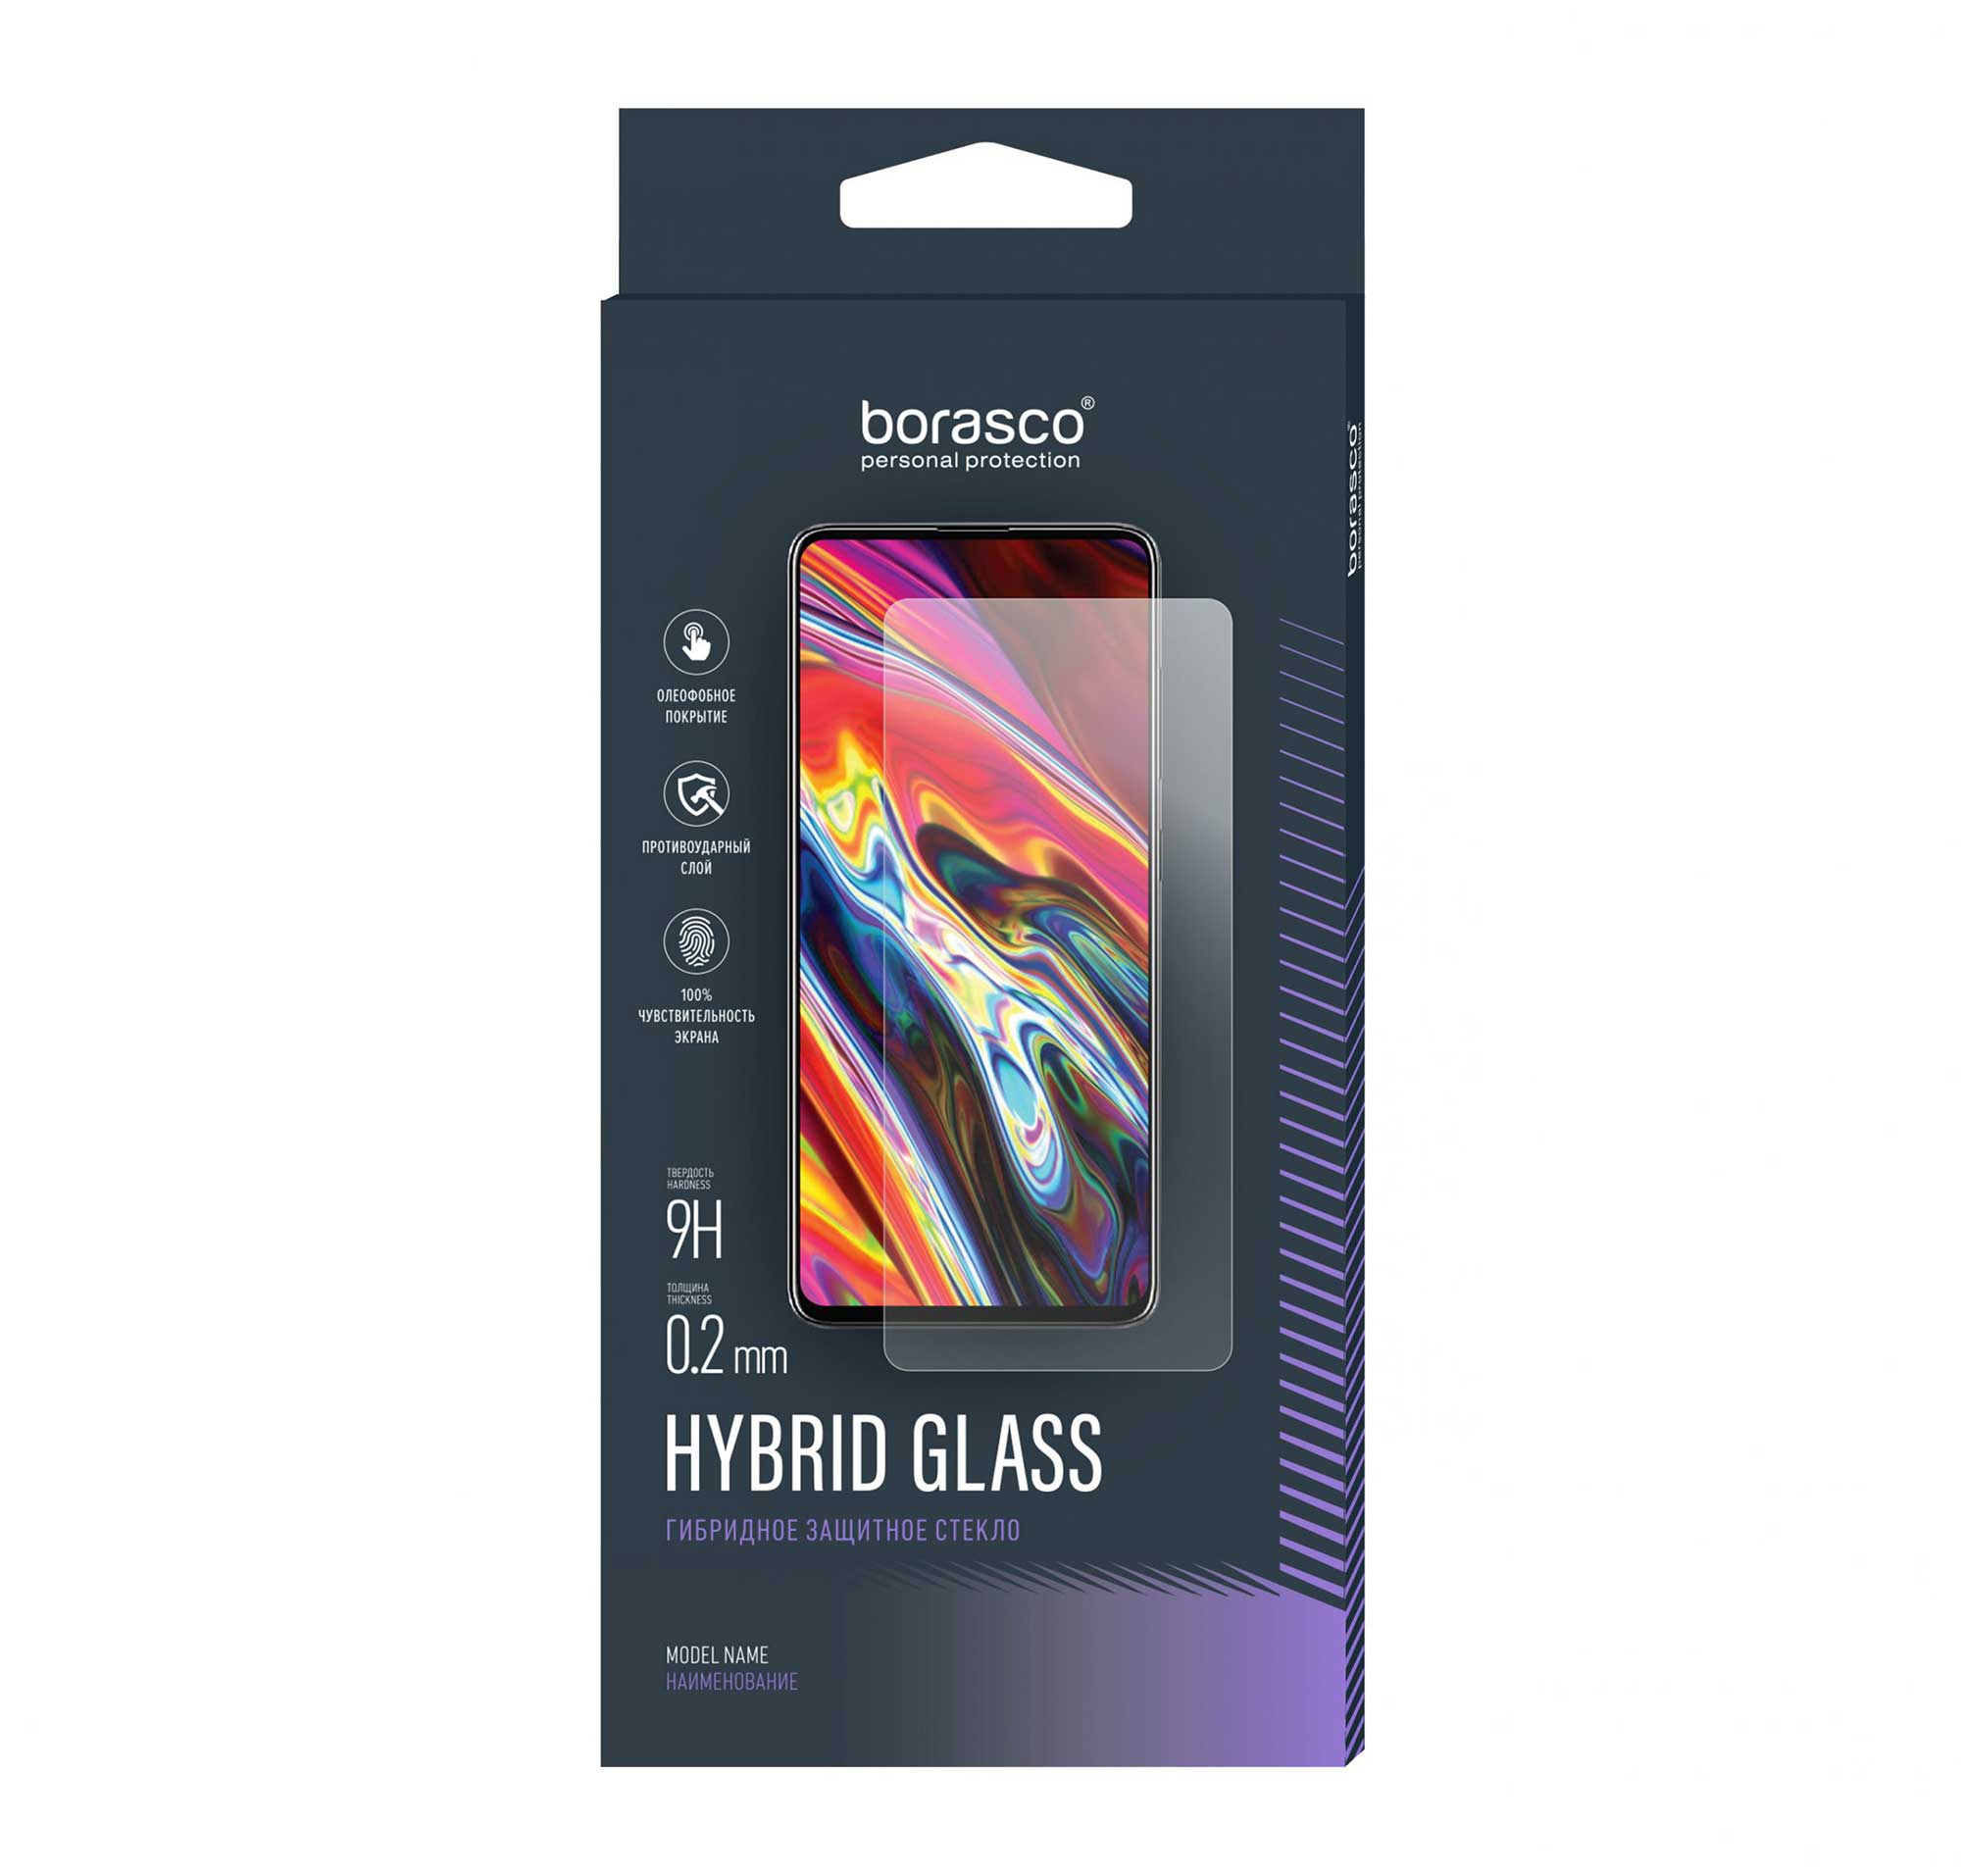 Защитное стекло Hybrid Glass для Itel A16 Plus защитное стекло borasco hybrid glass для itel vision 3 plus